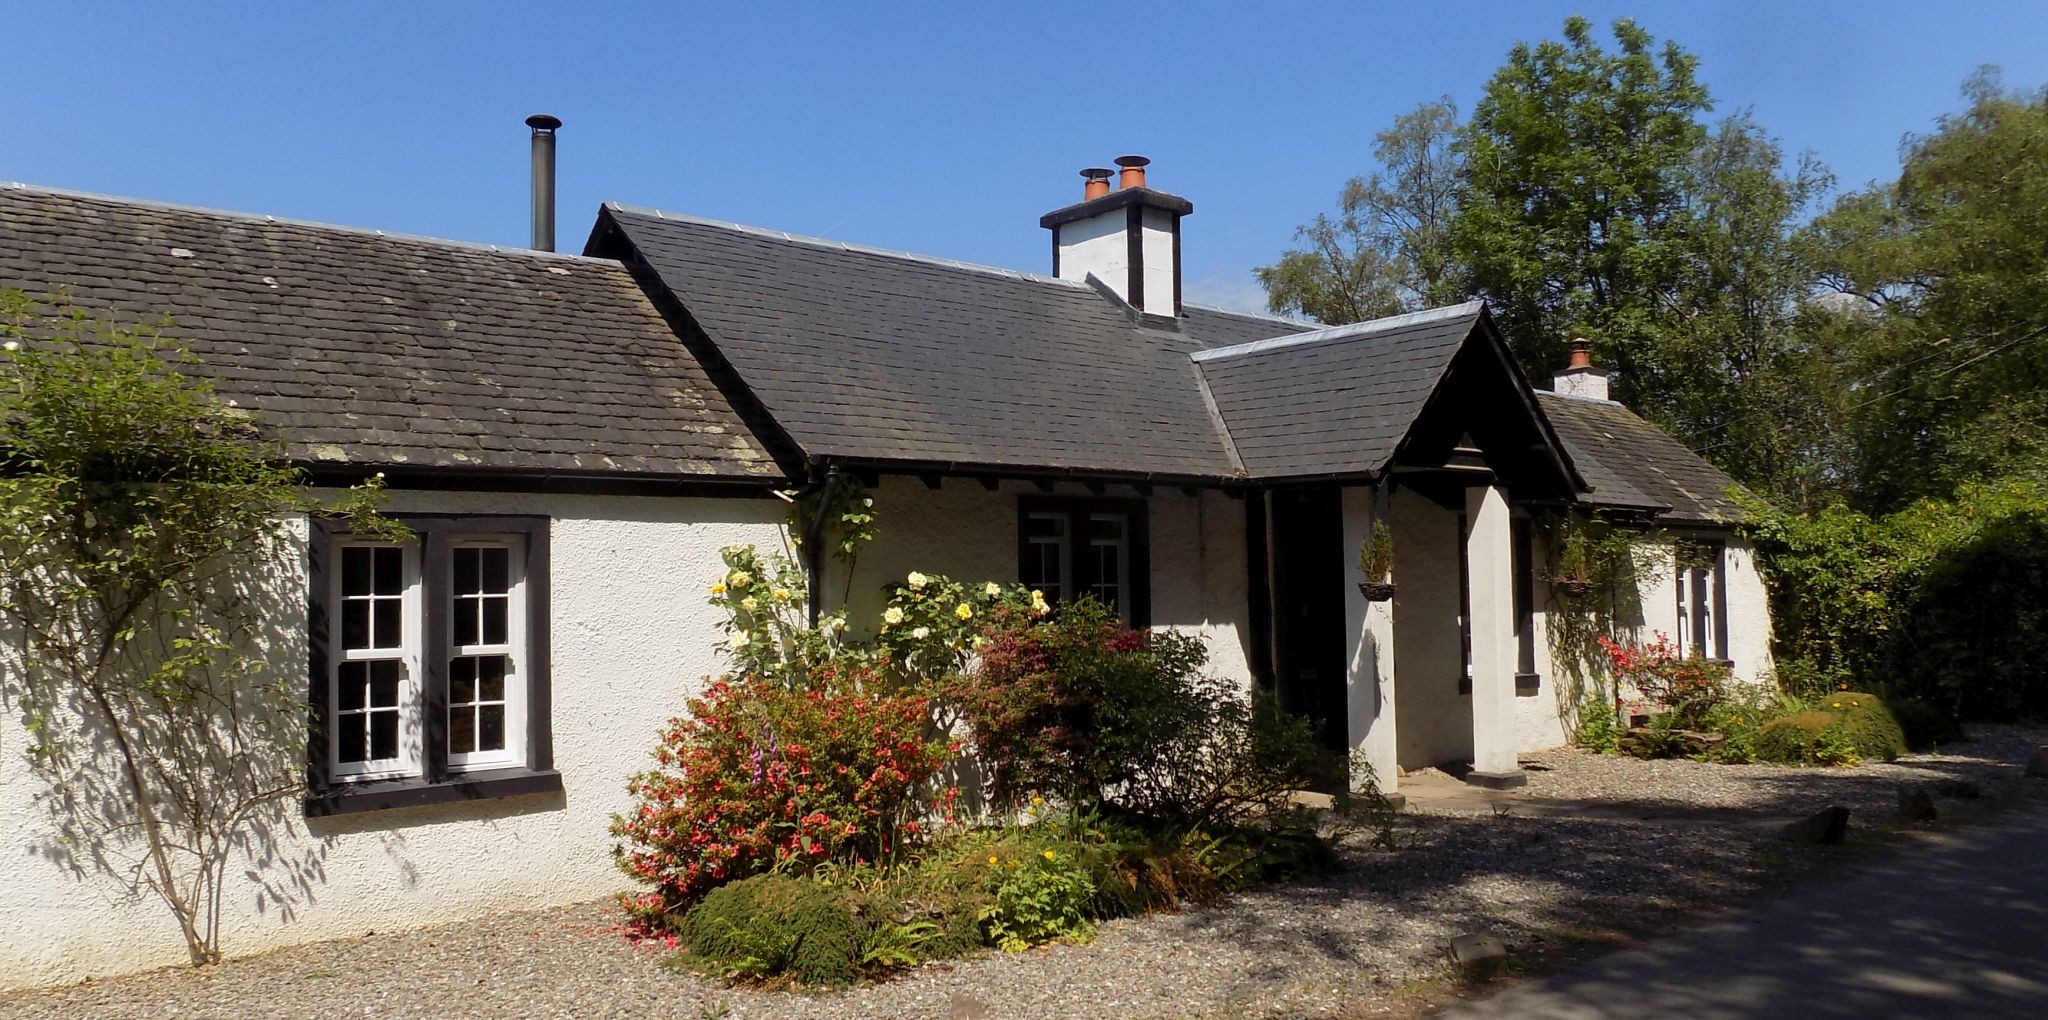 Cottage on the side of Loch Venacher